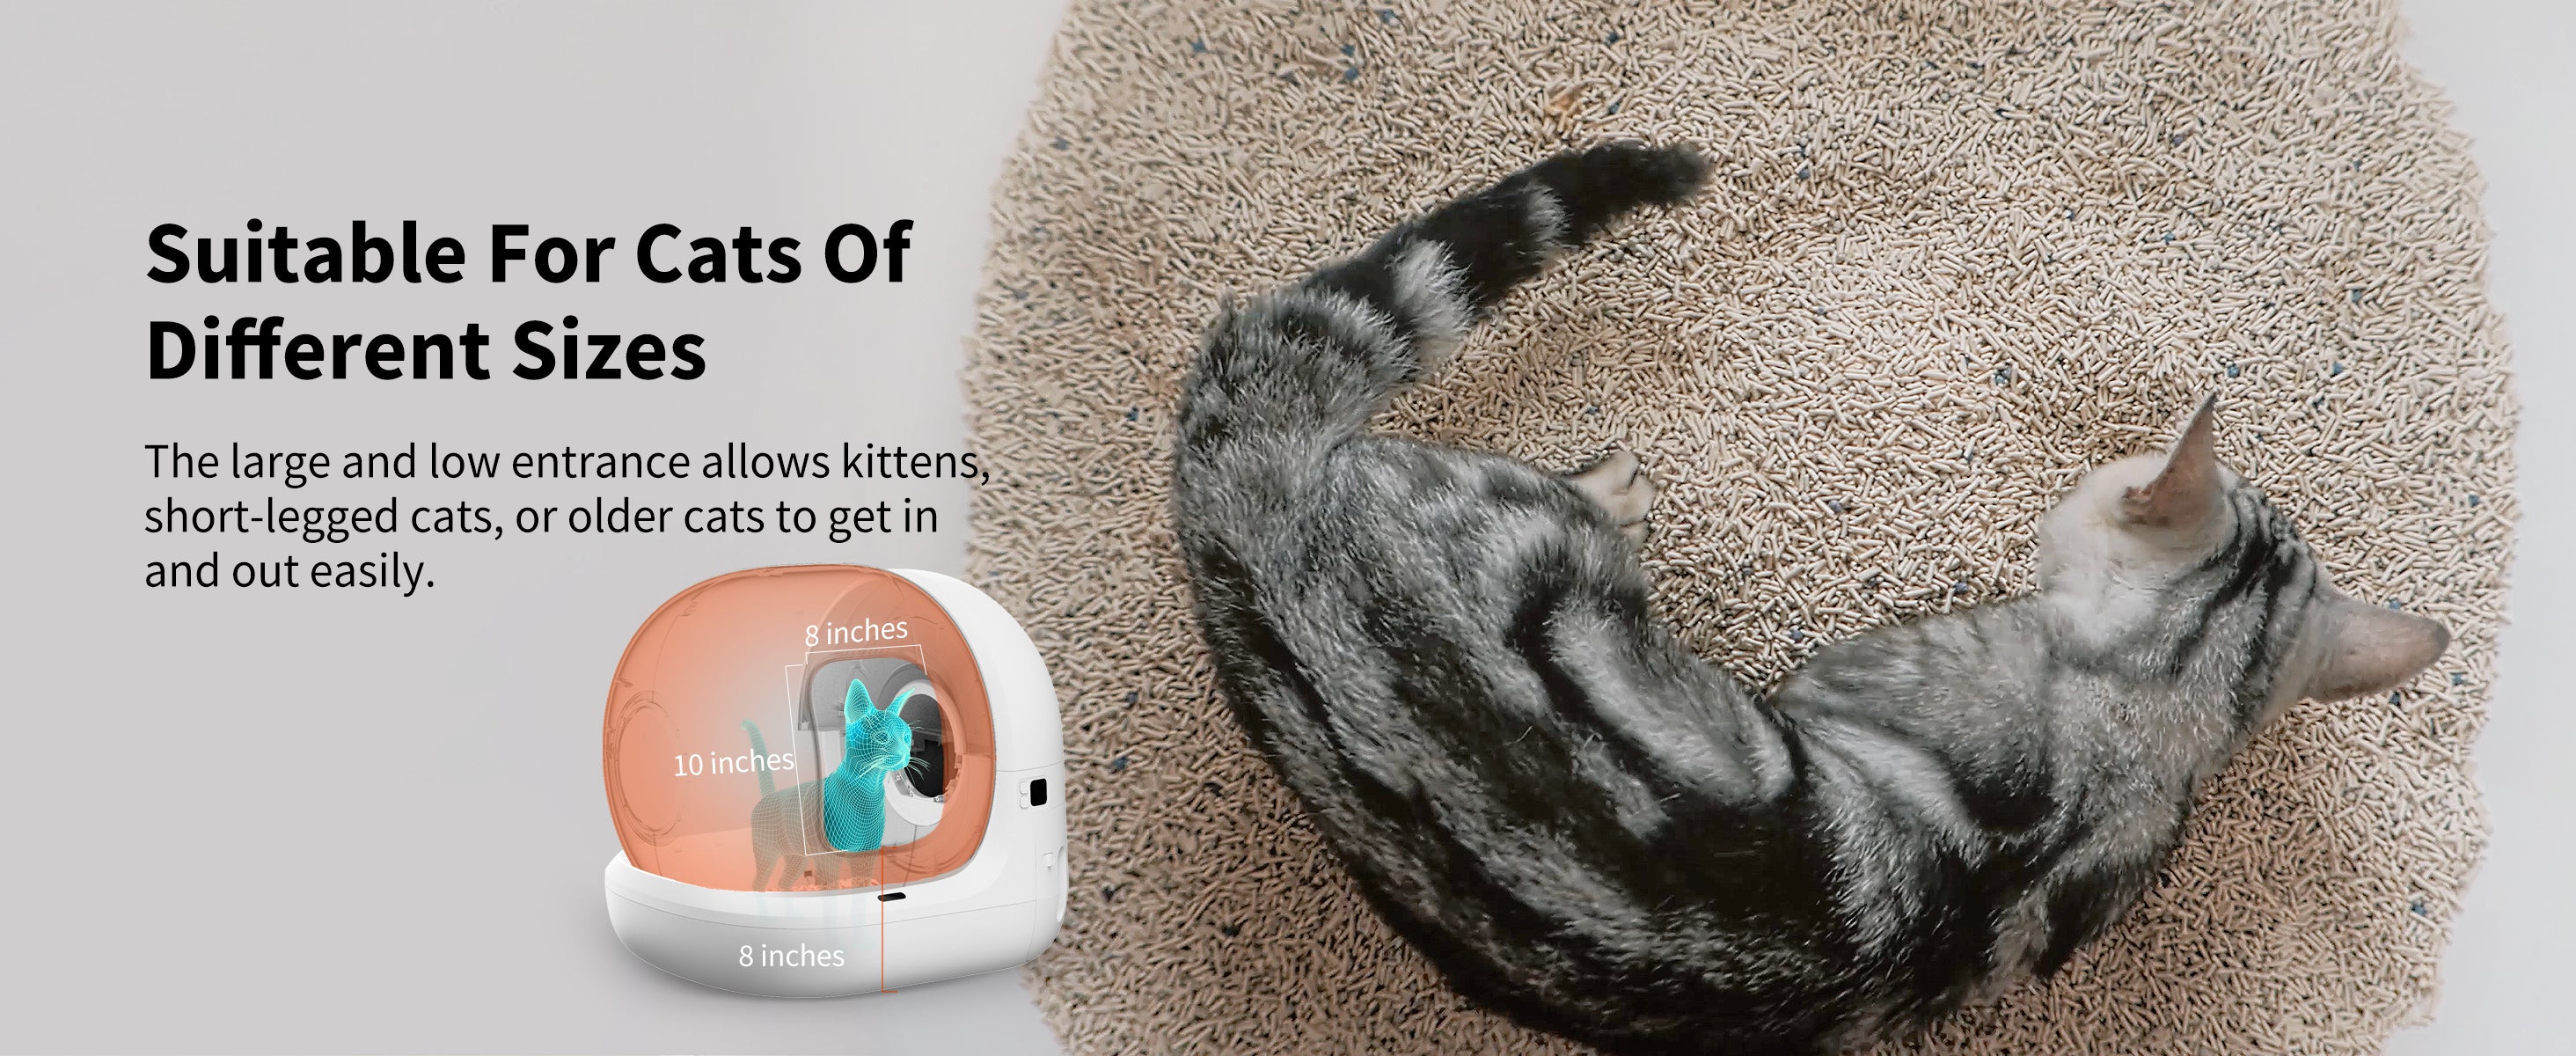 PETKIT Pura Max Automatic Self Cleaning Cat Litter Box Smart Cat Litte –  savvypetz